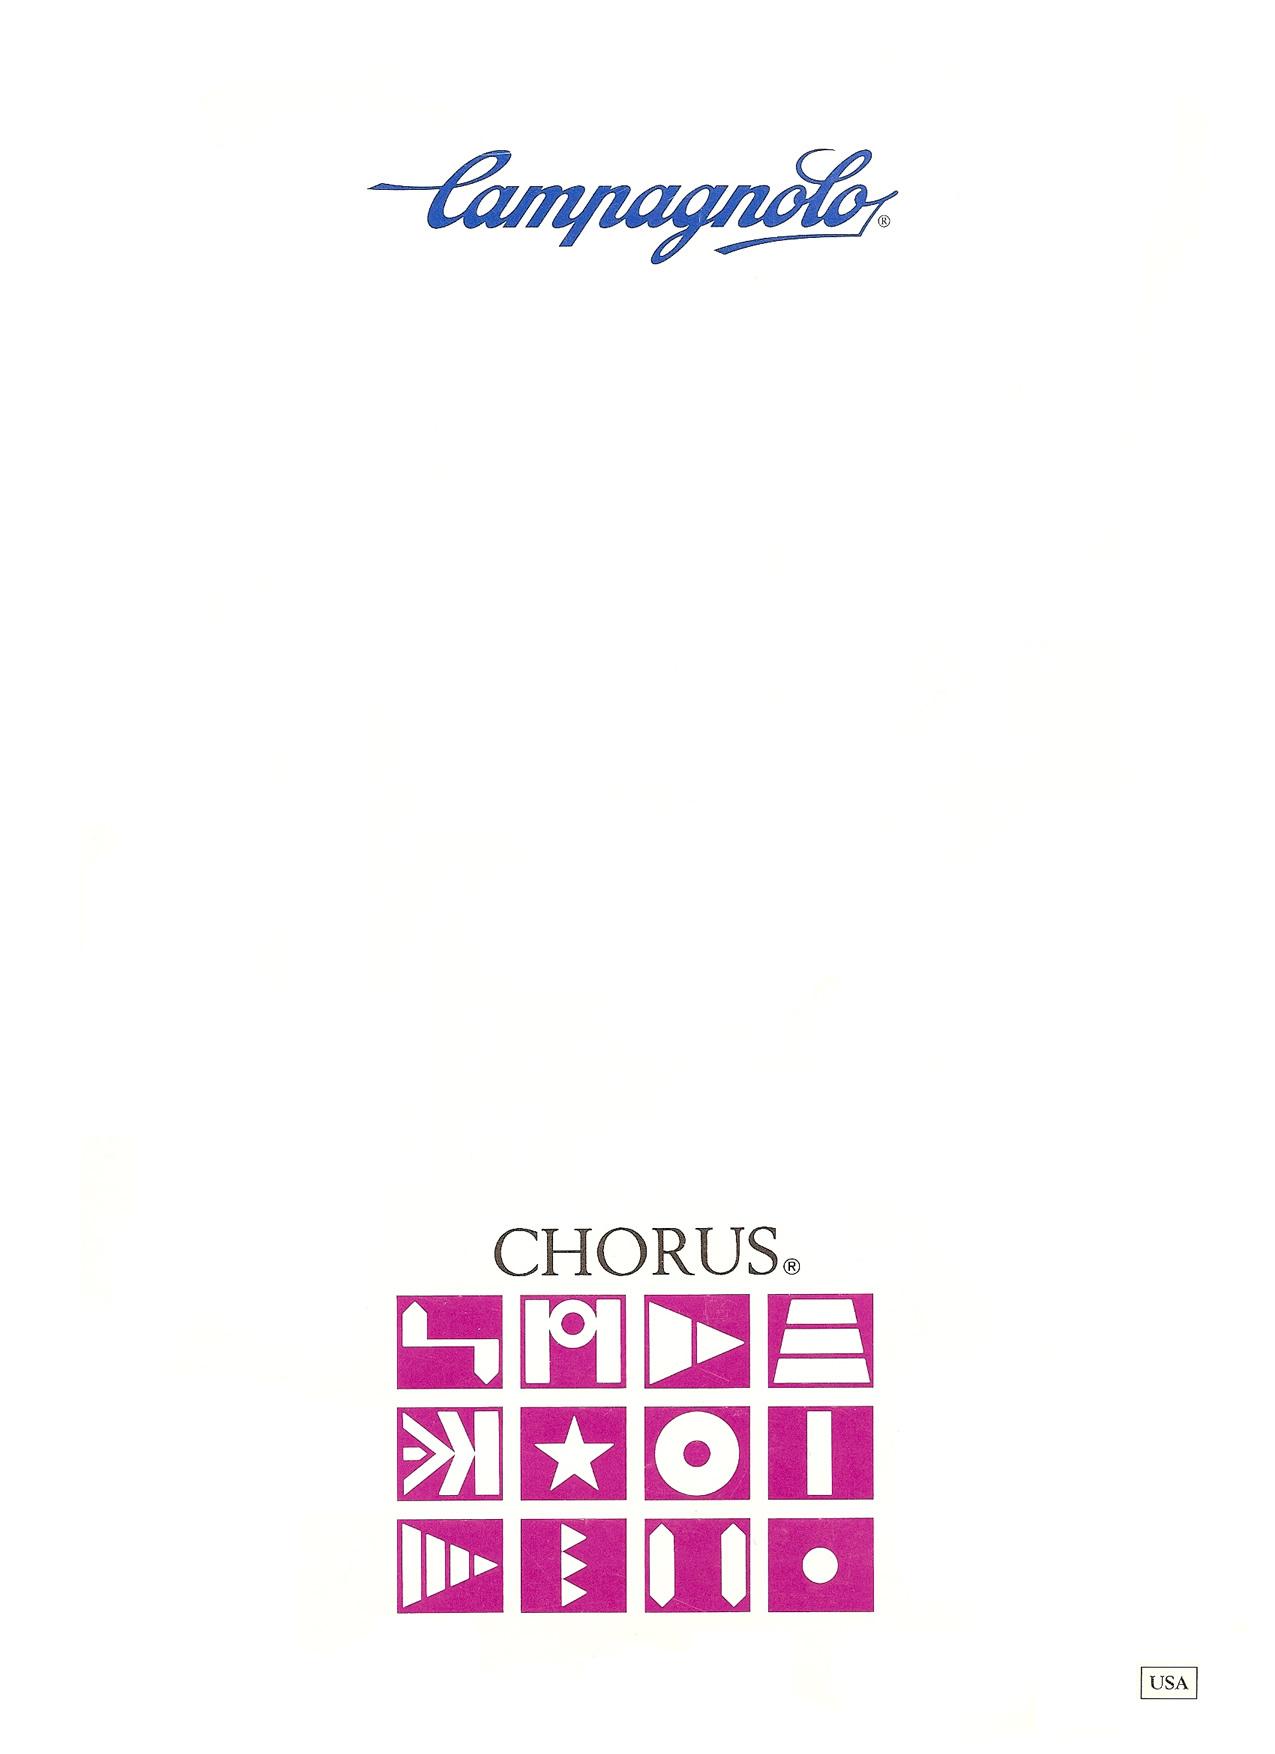 1987 Campagnolo Chorus Catalog